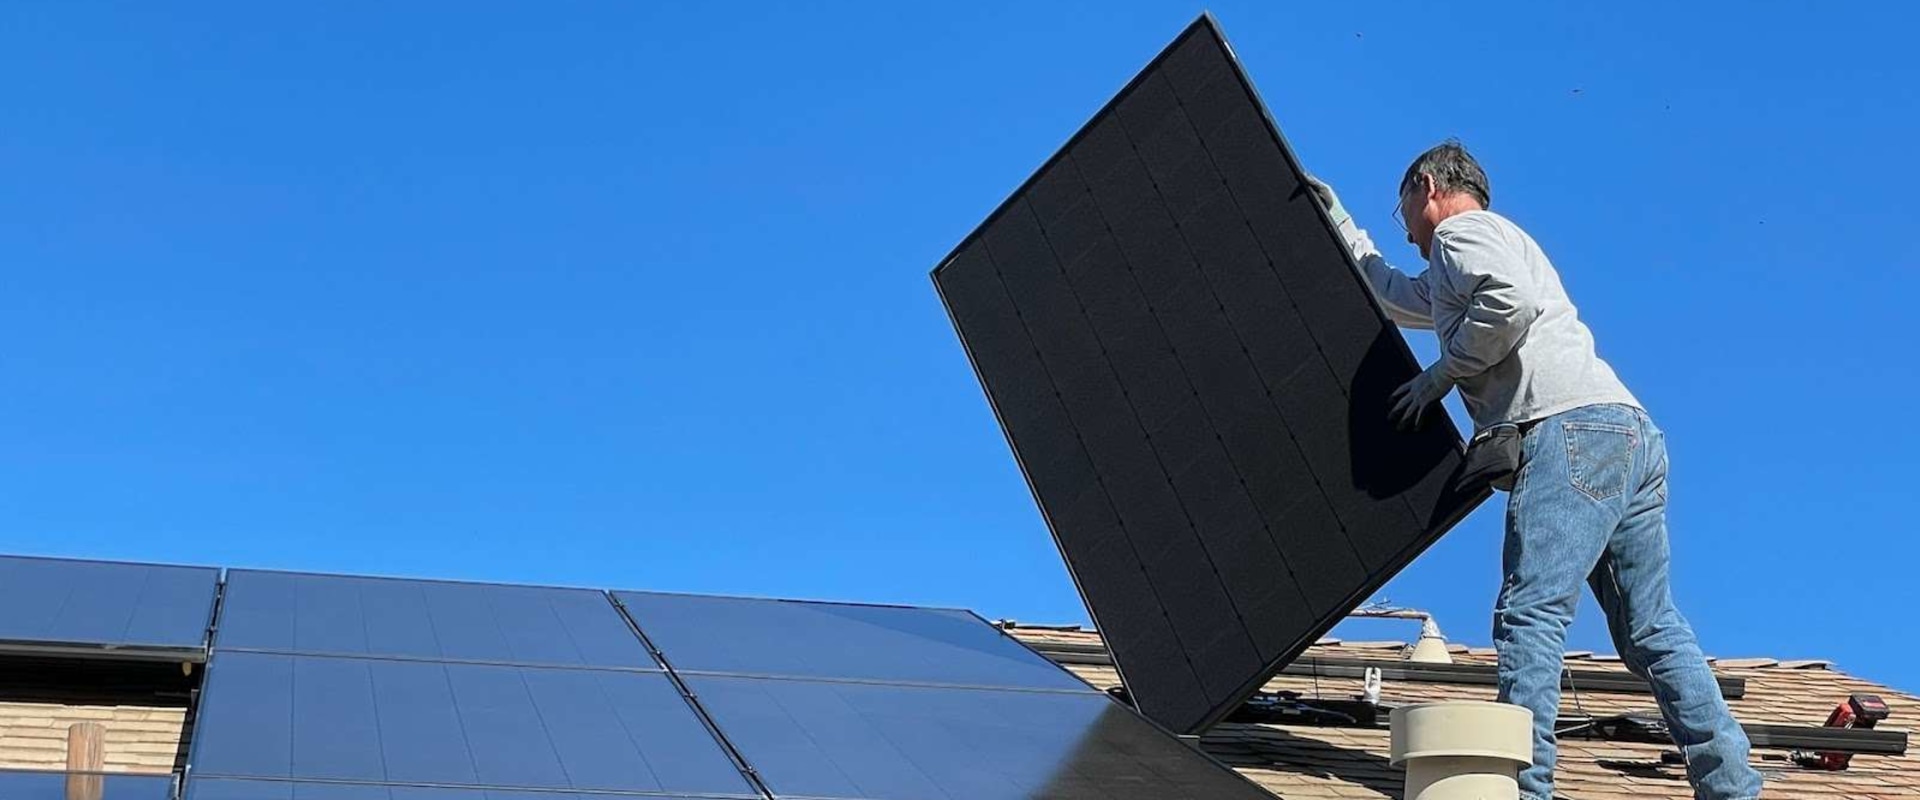 Best Budget Solar Screwdrivers Review